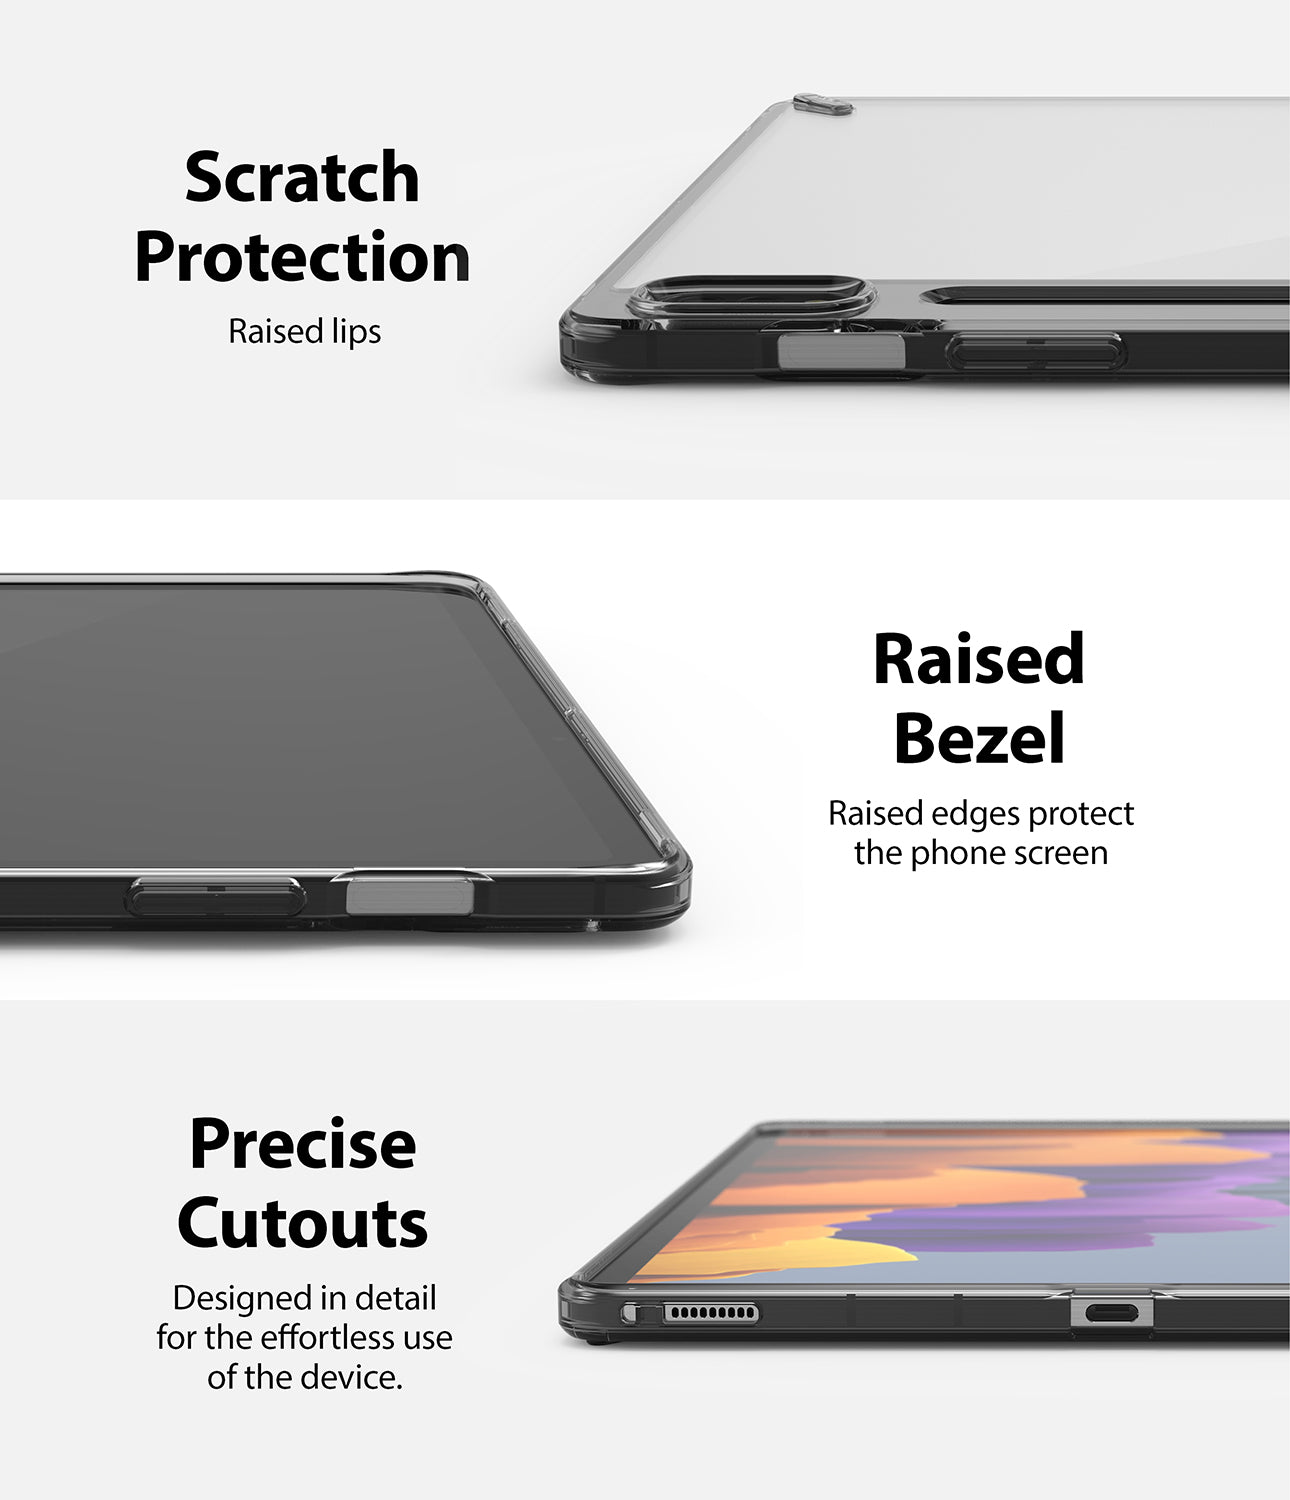 Coque Fusion Samsung Galaxy Tab S7 Clear